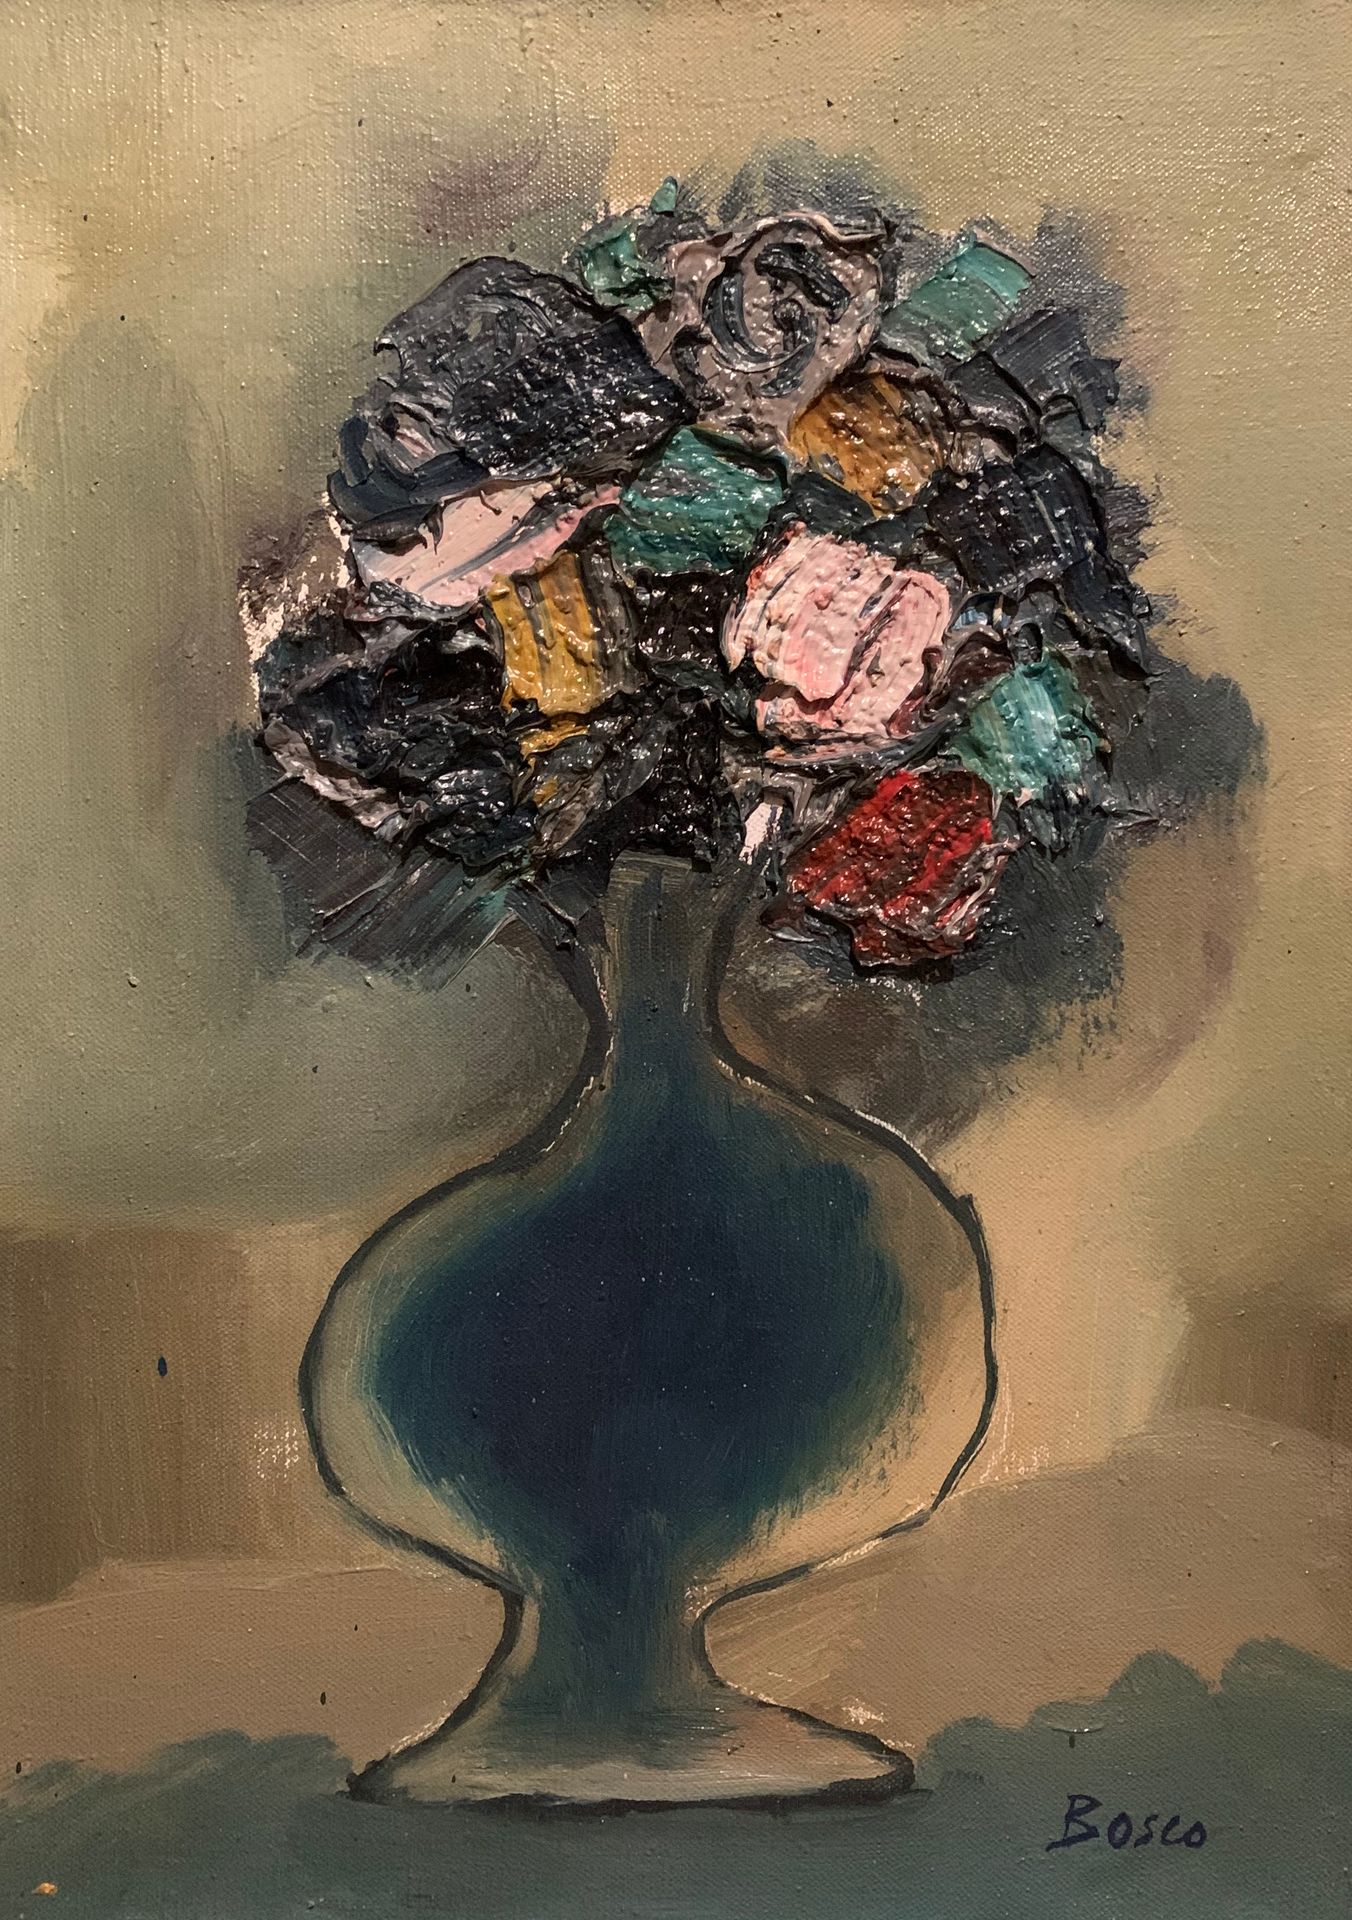 Null 皮埃尔-博斯克 (1909-1993)

花瓶

布面油画，右下角有签名

39 x 28 cm